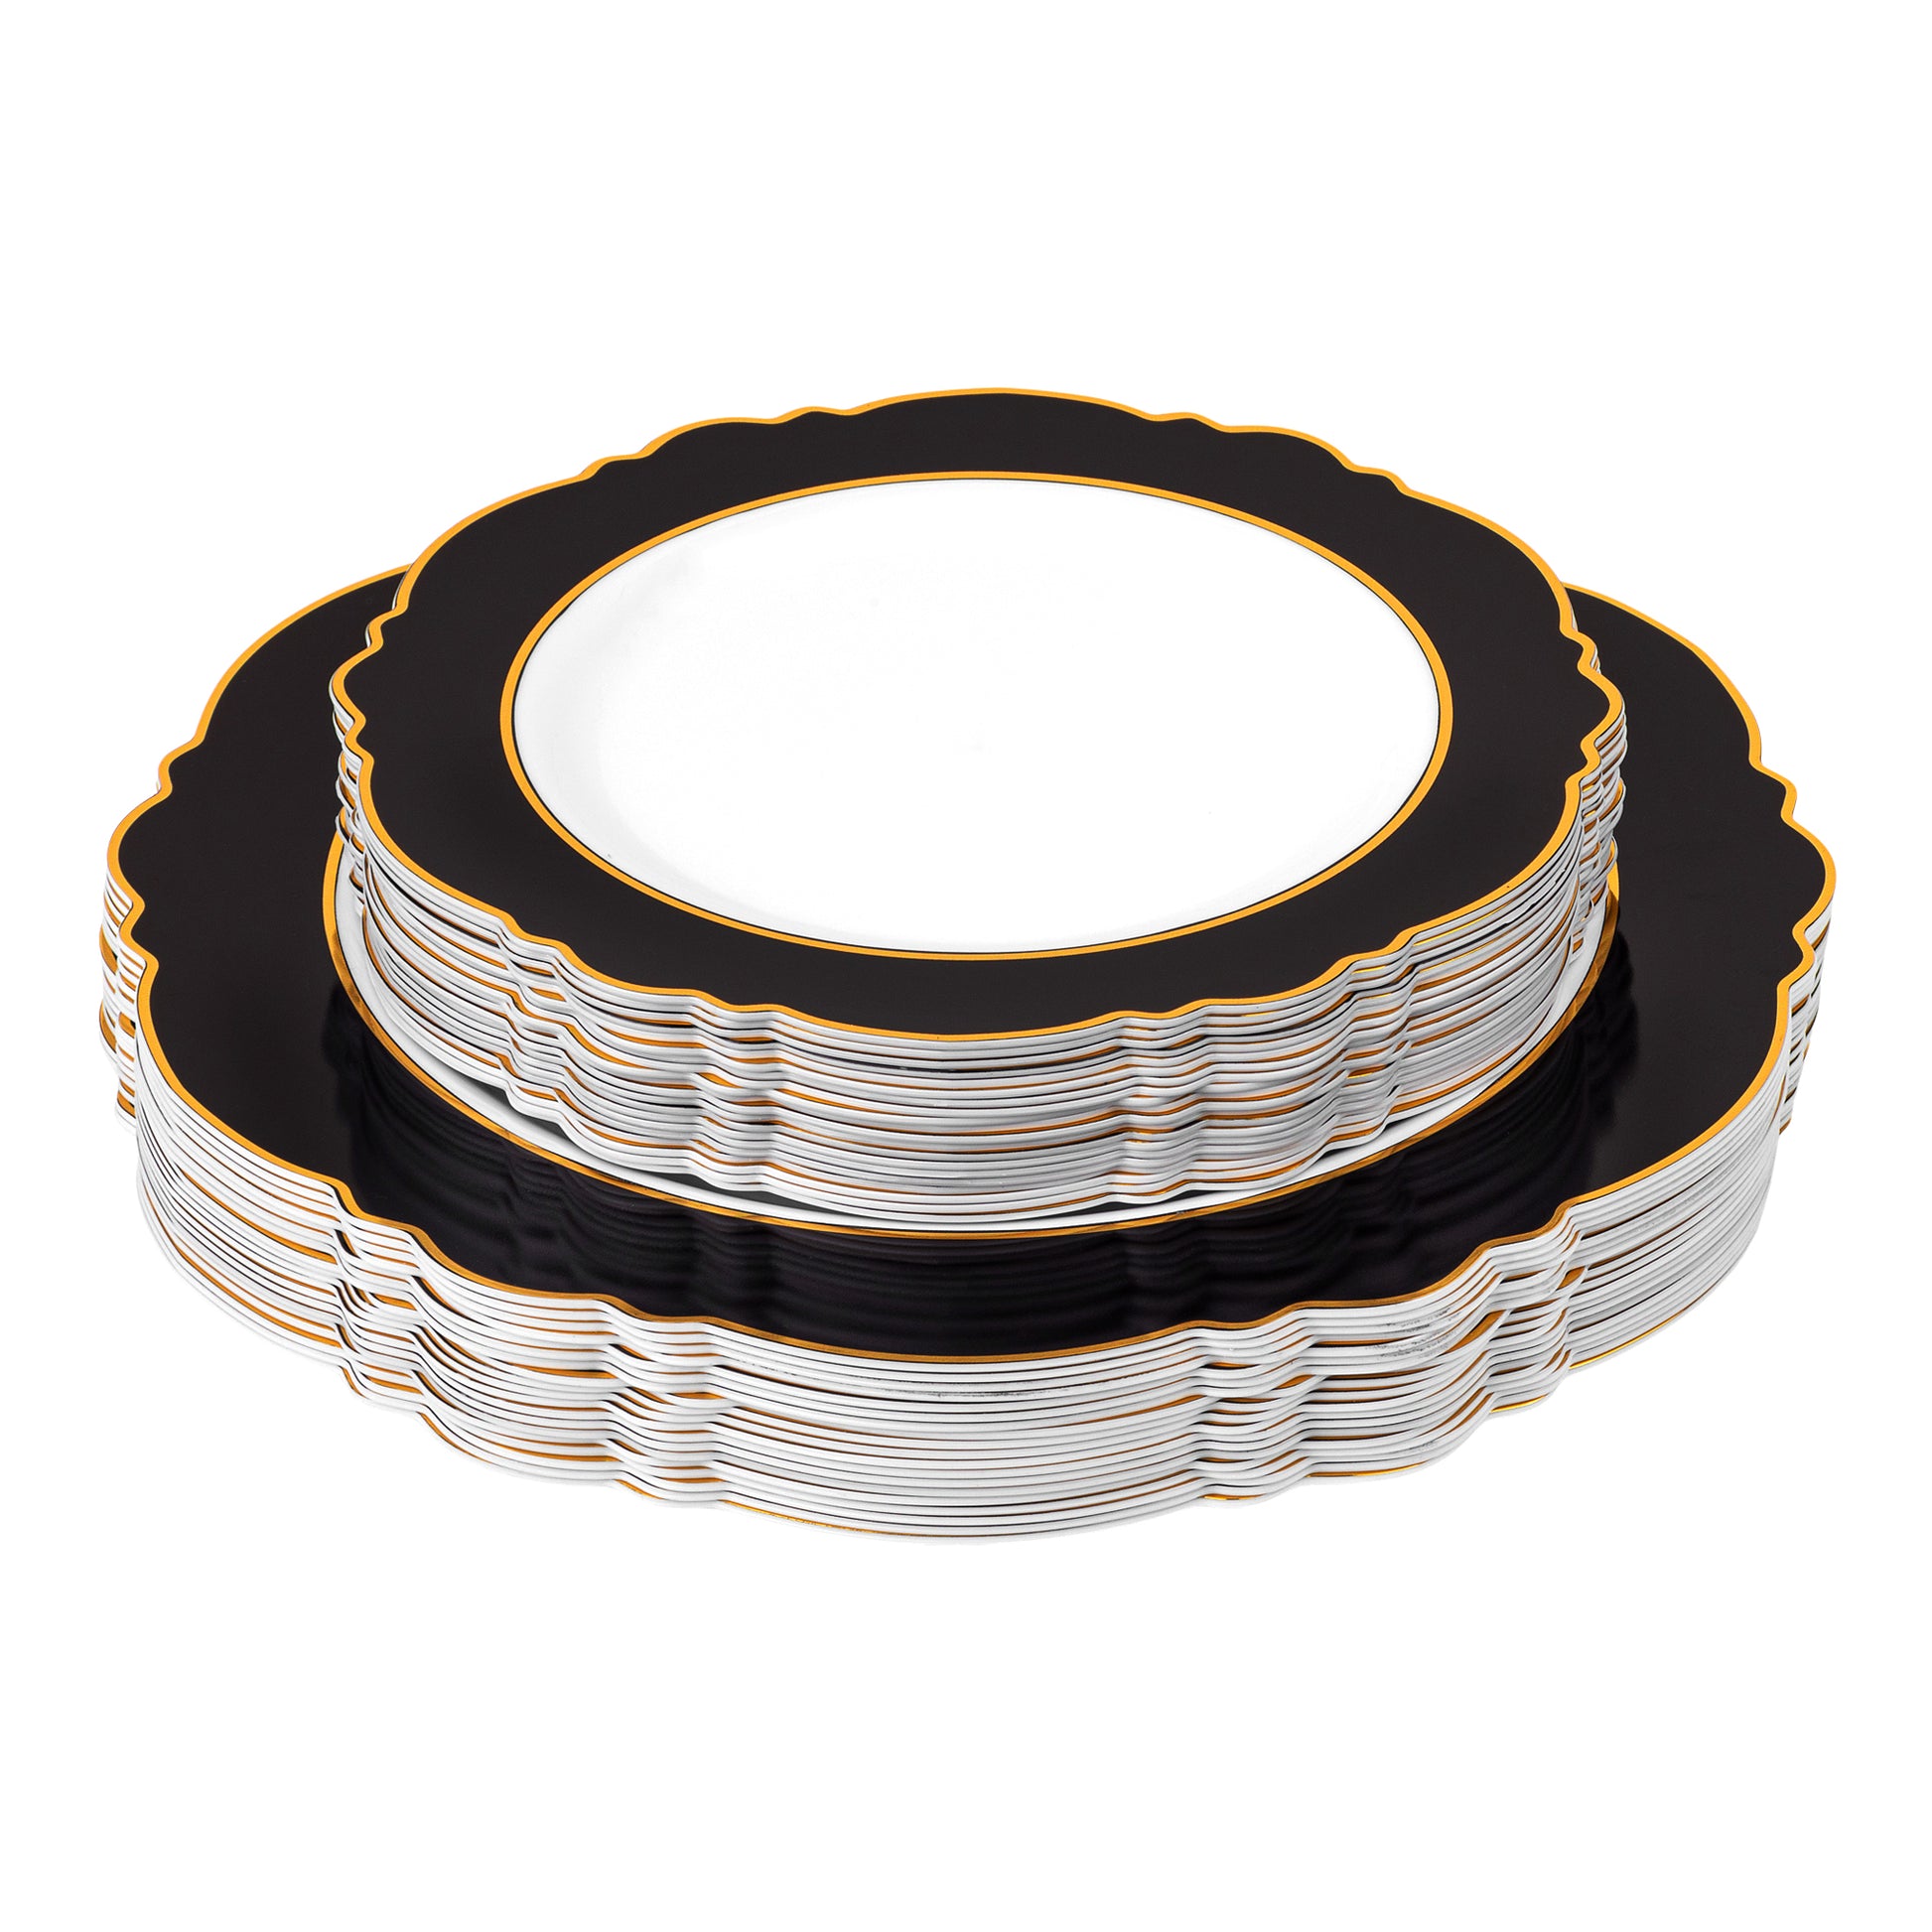 Scallop Disposable Plastic Plates 40 pcs Combo Pack - Black & Gold-Trimmed